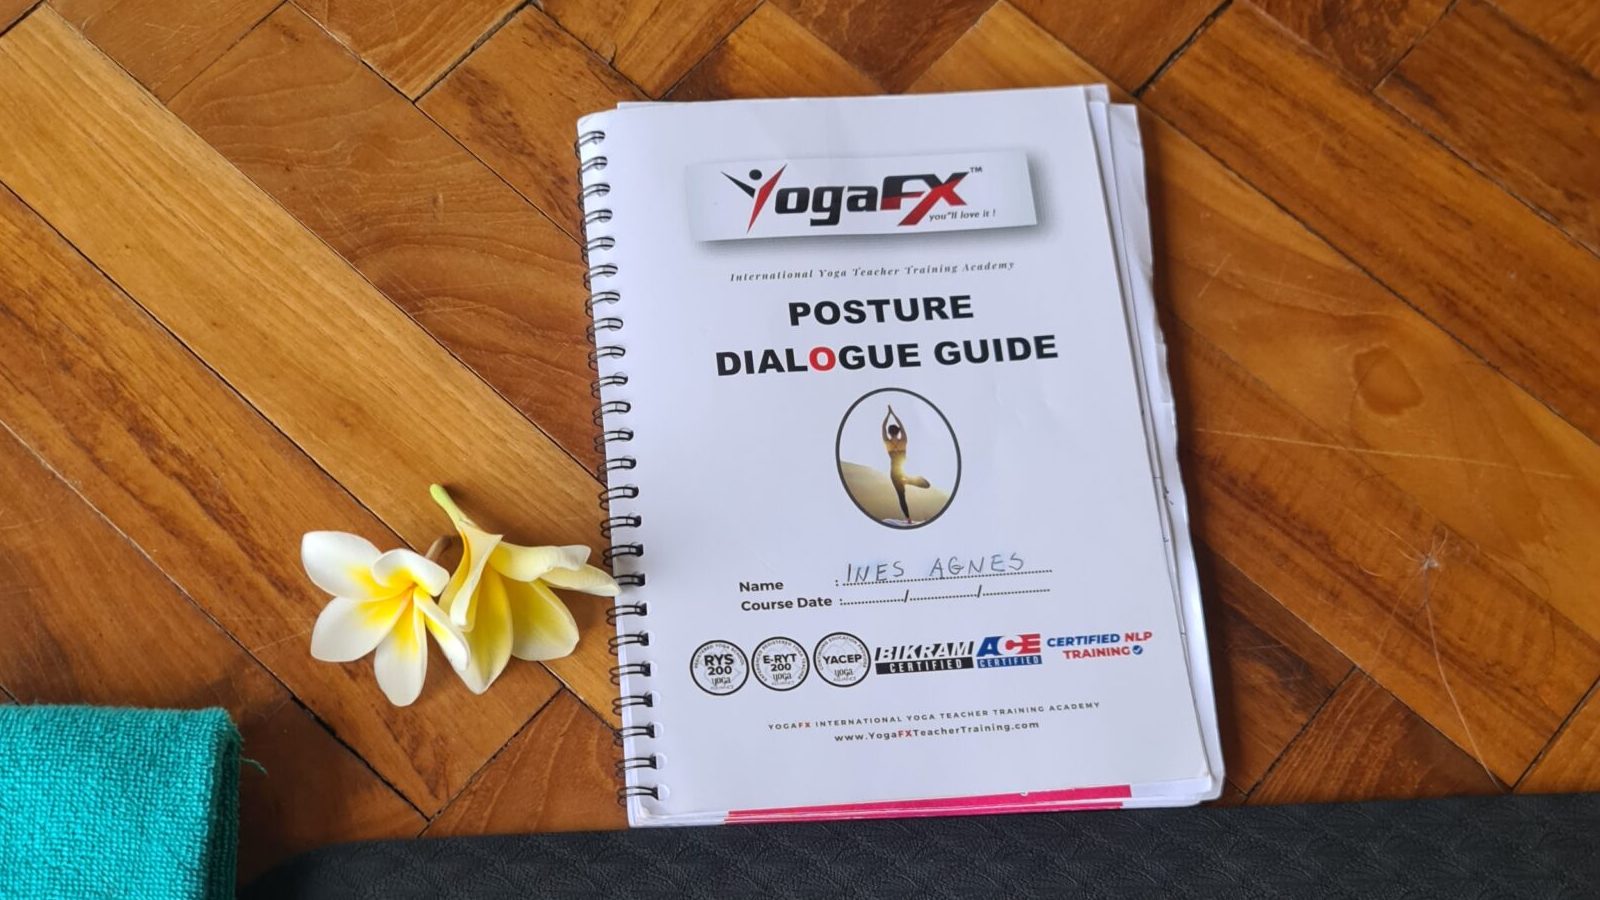 10 Best Yoga Poses Printable Chart PDF for Free at Printablee